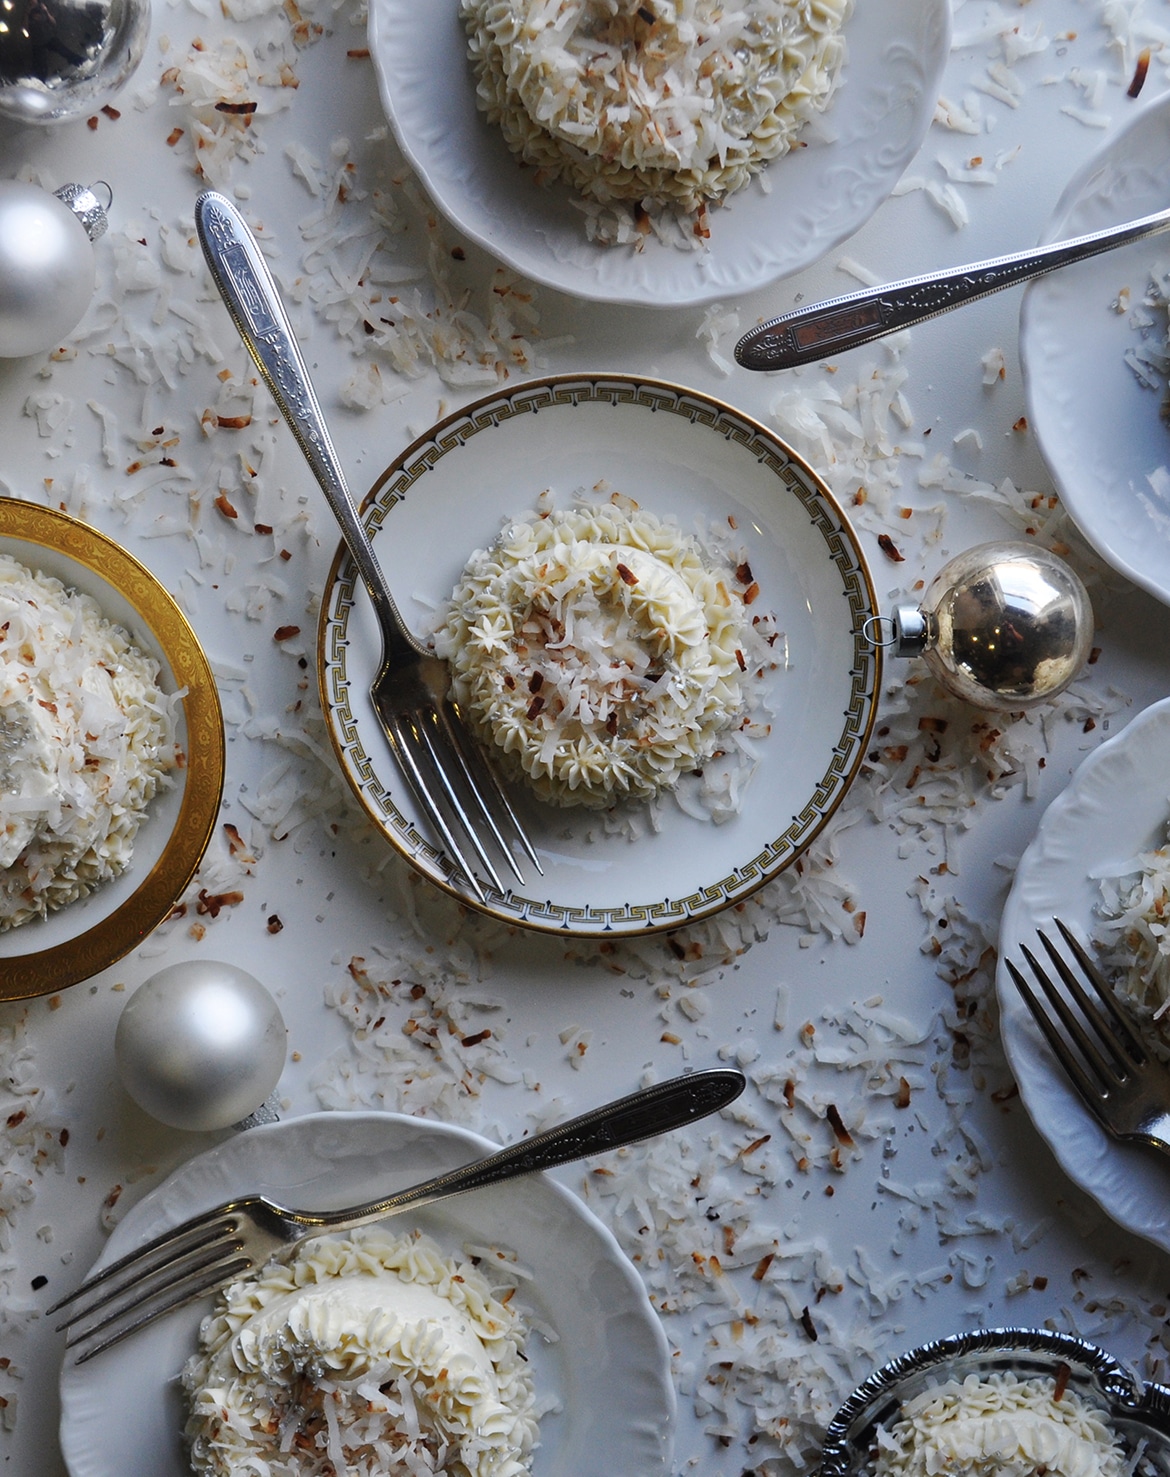 Several plates of mini coconut cakes with maple Italian meringue buttercream.